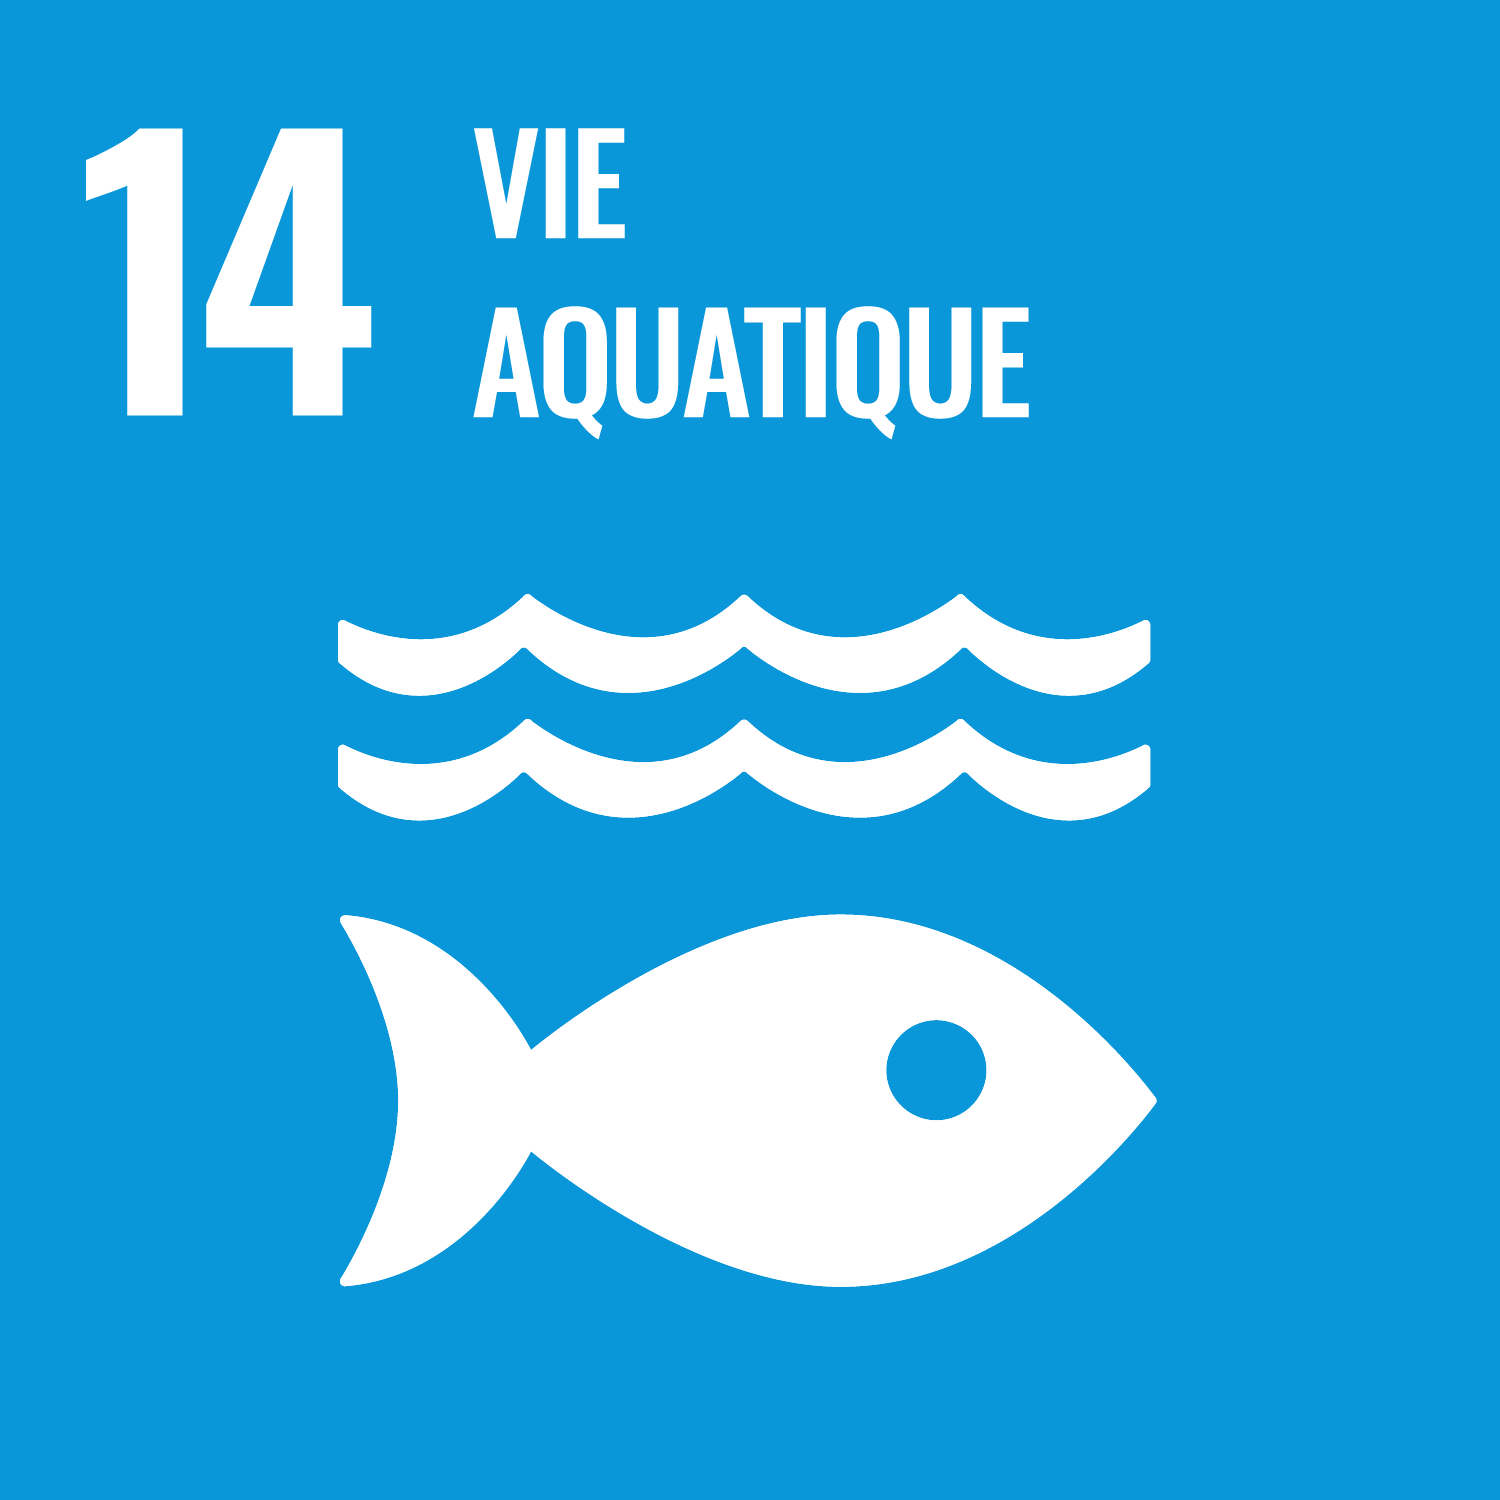 Objectif de Développement Durable de l'O.N.U. 14 : vie aquatique